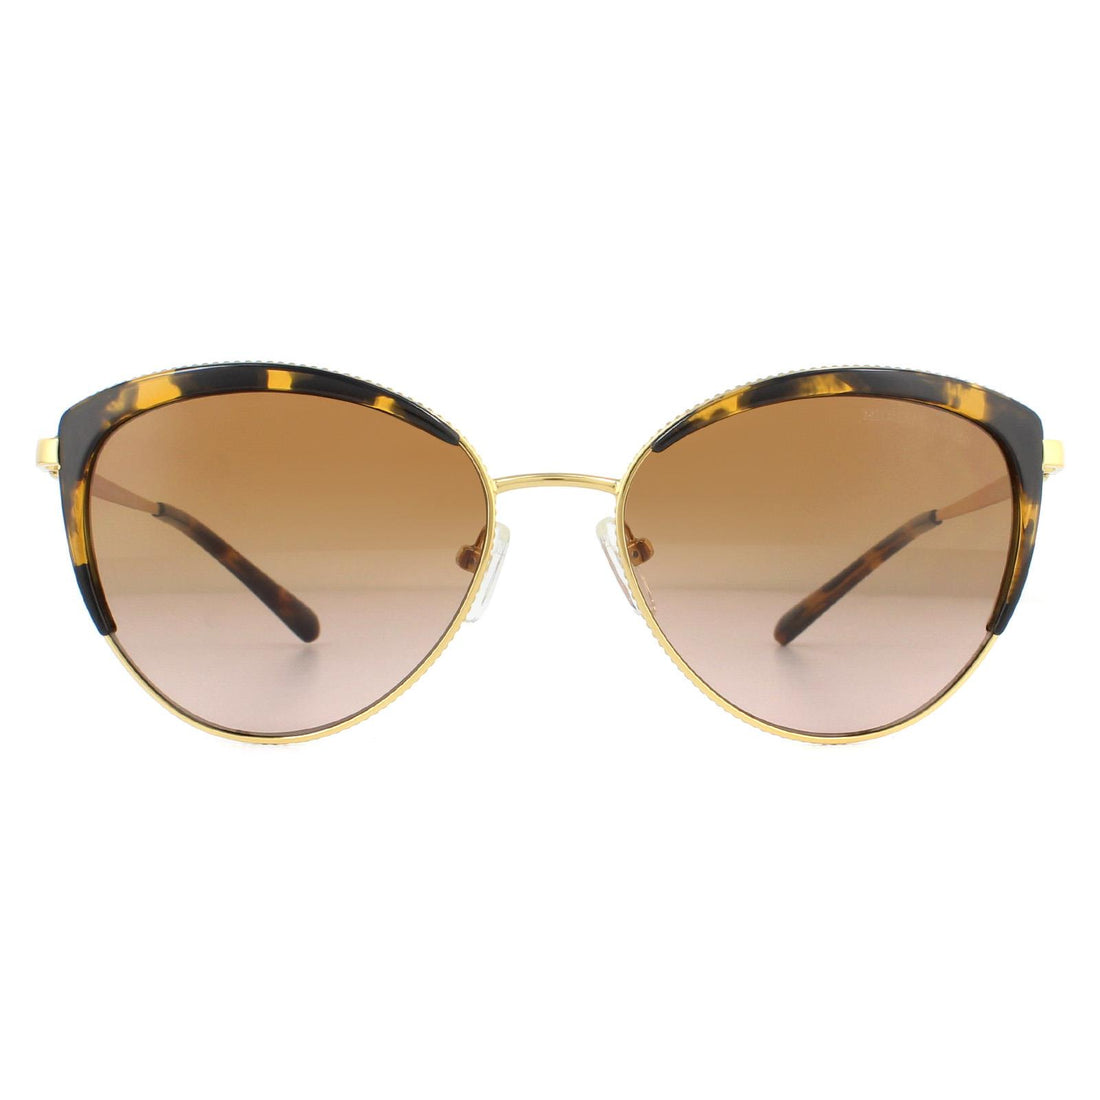 Michael Kors Biscayne MK1046 Sunglasses Light Gold and Tortoise / Brown Gradient